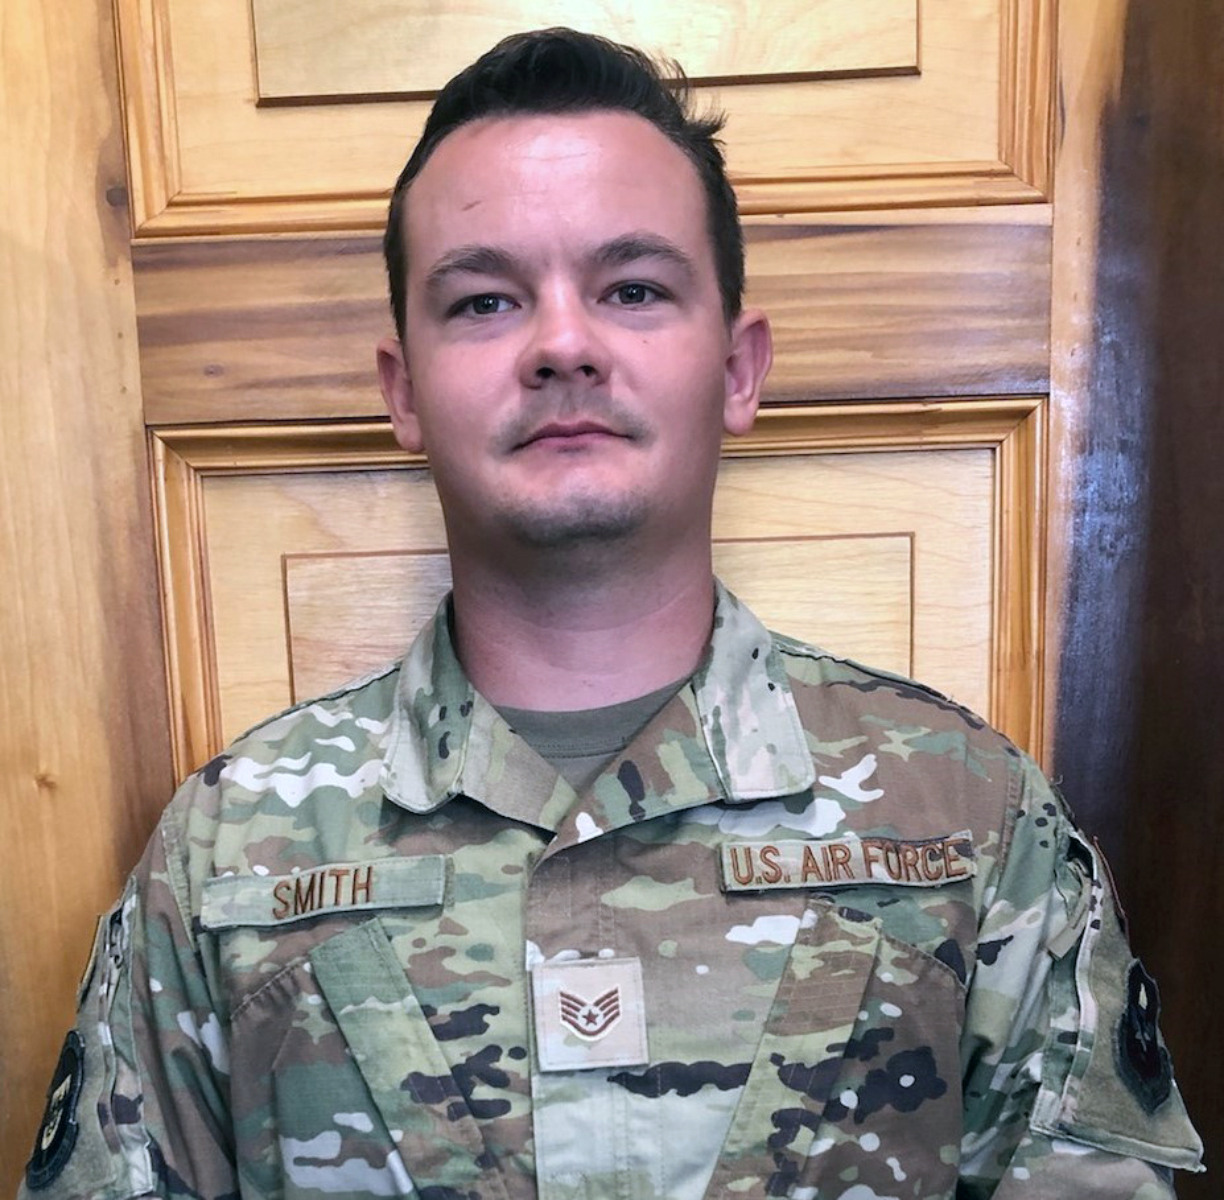 Staff Sgt. Aaron J. Smith